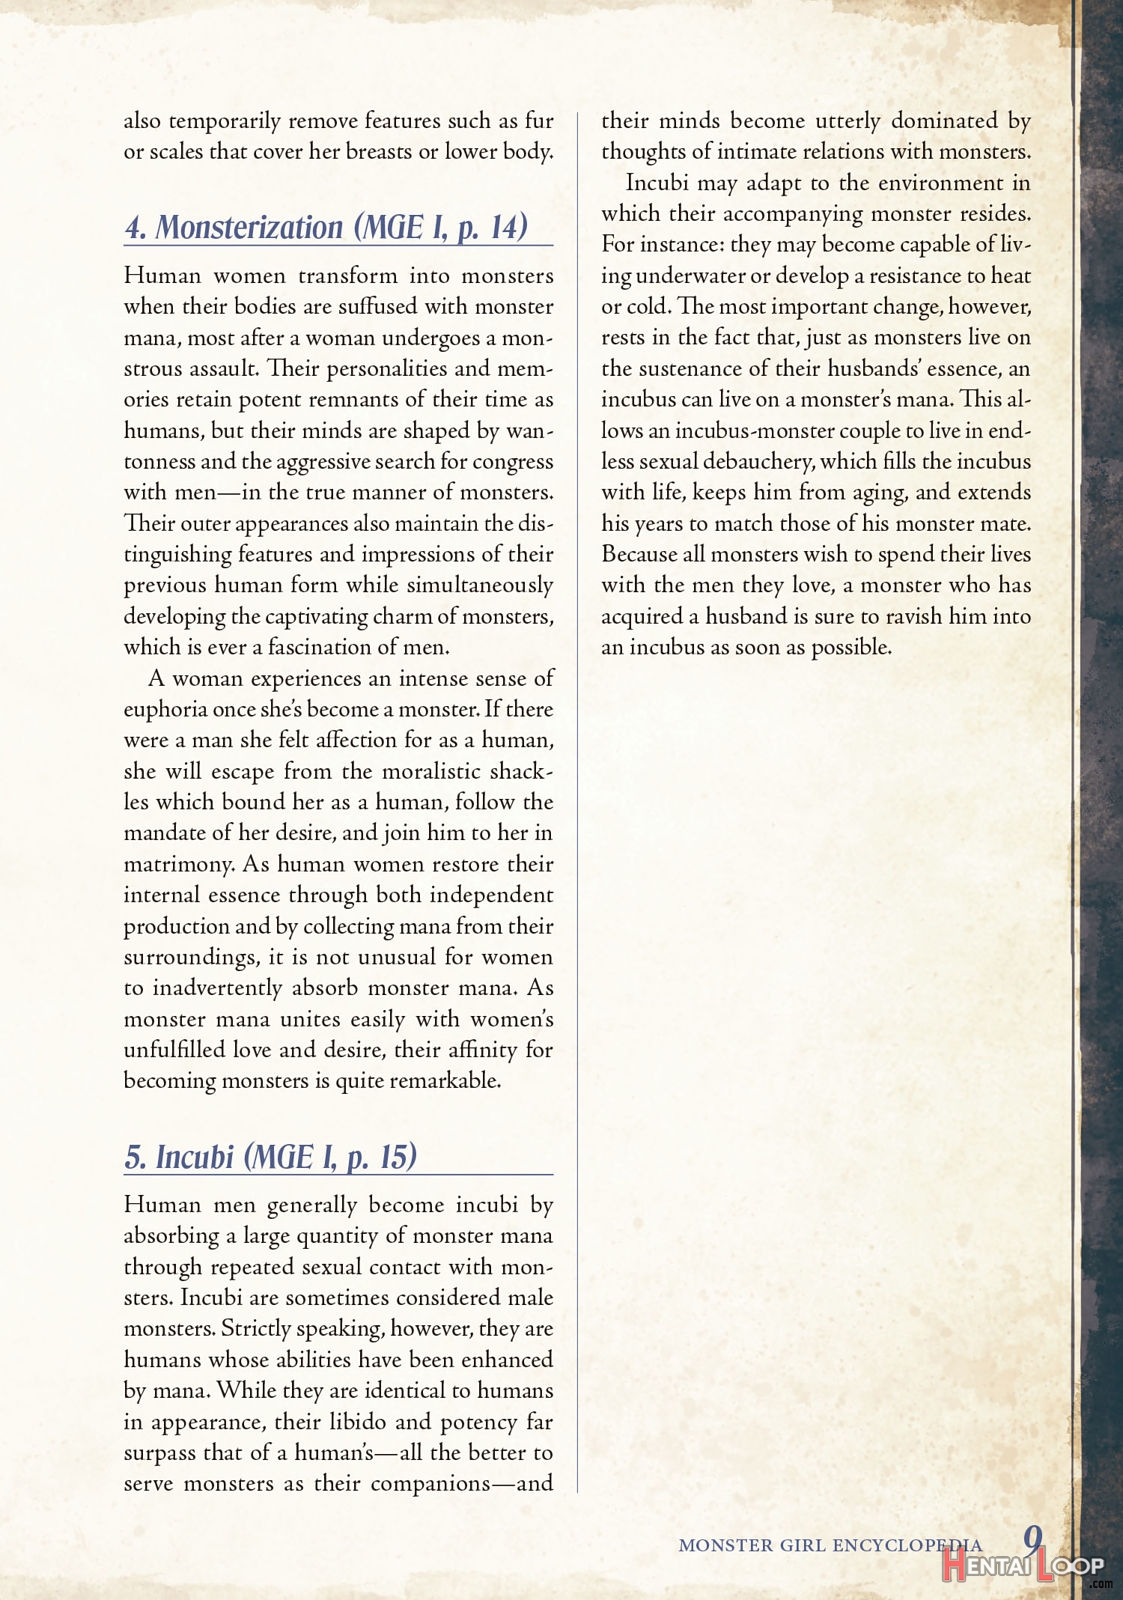 Monster Girl Encyclopedia Vol. 2 page 10